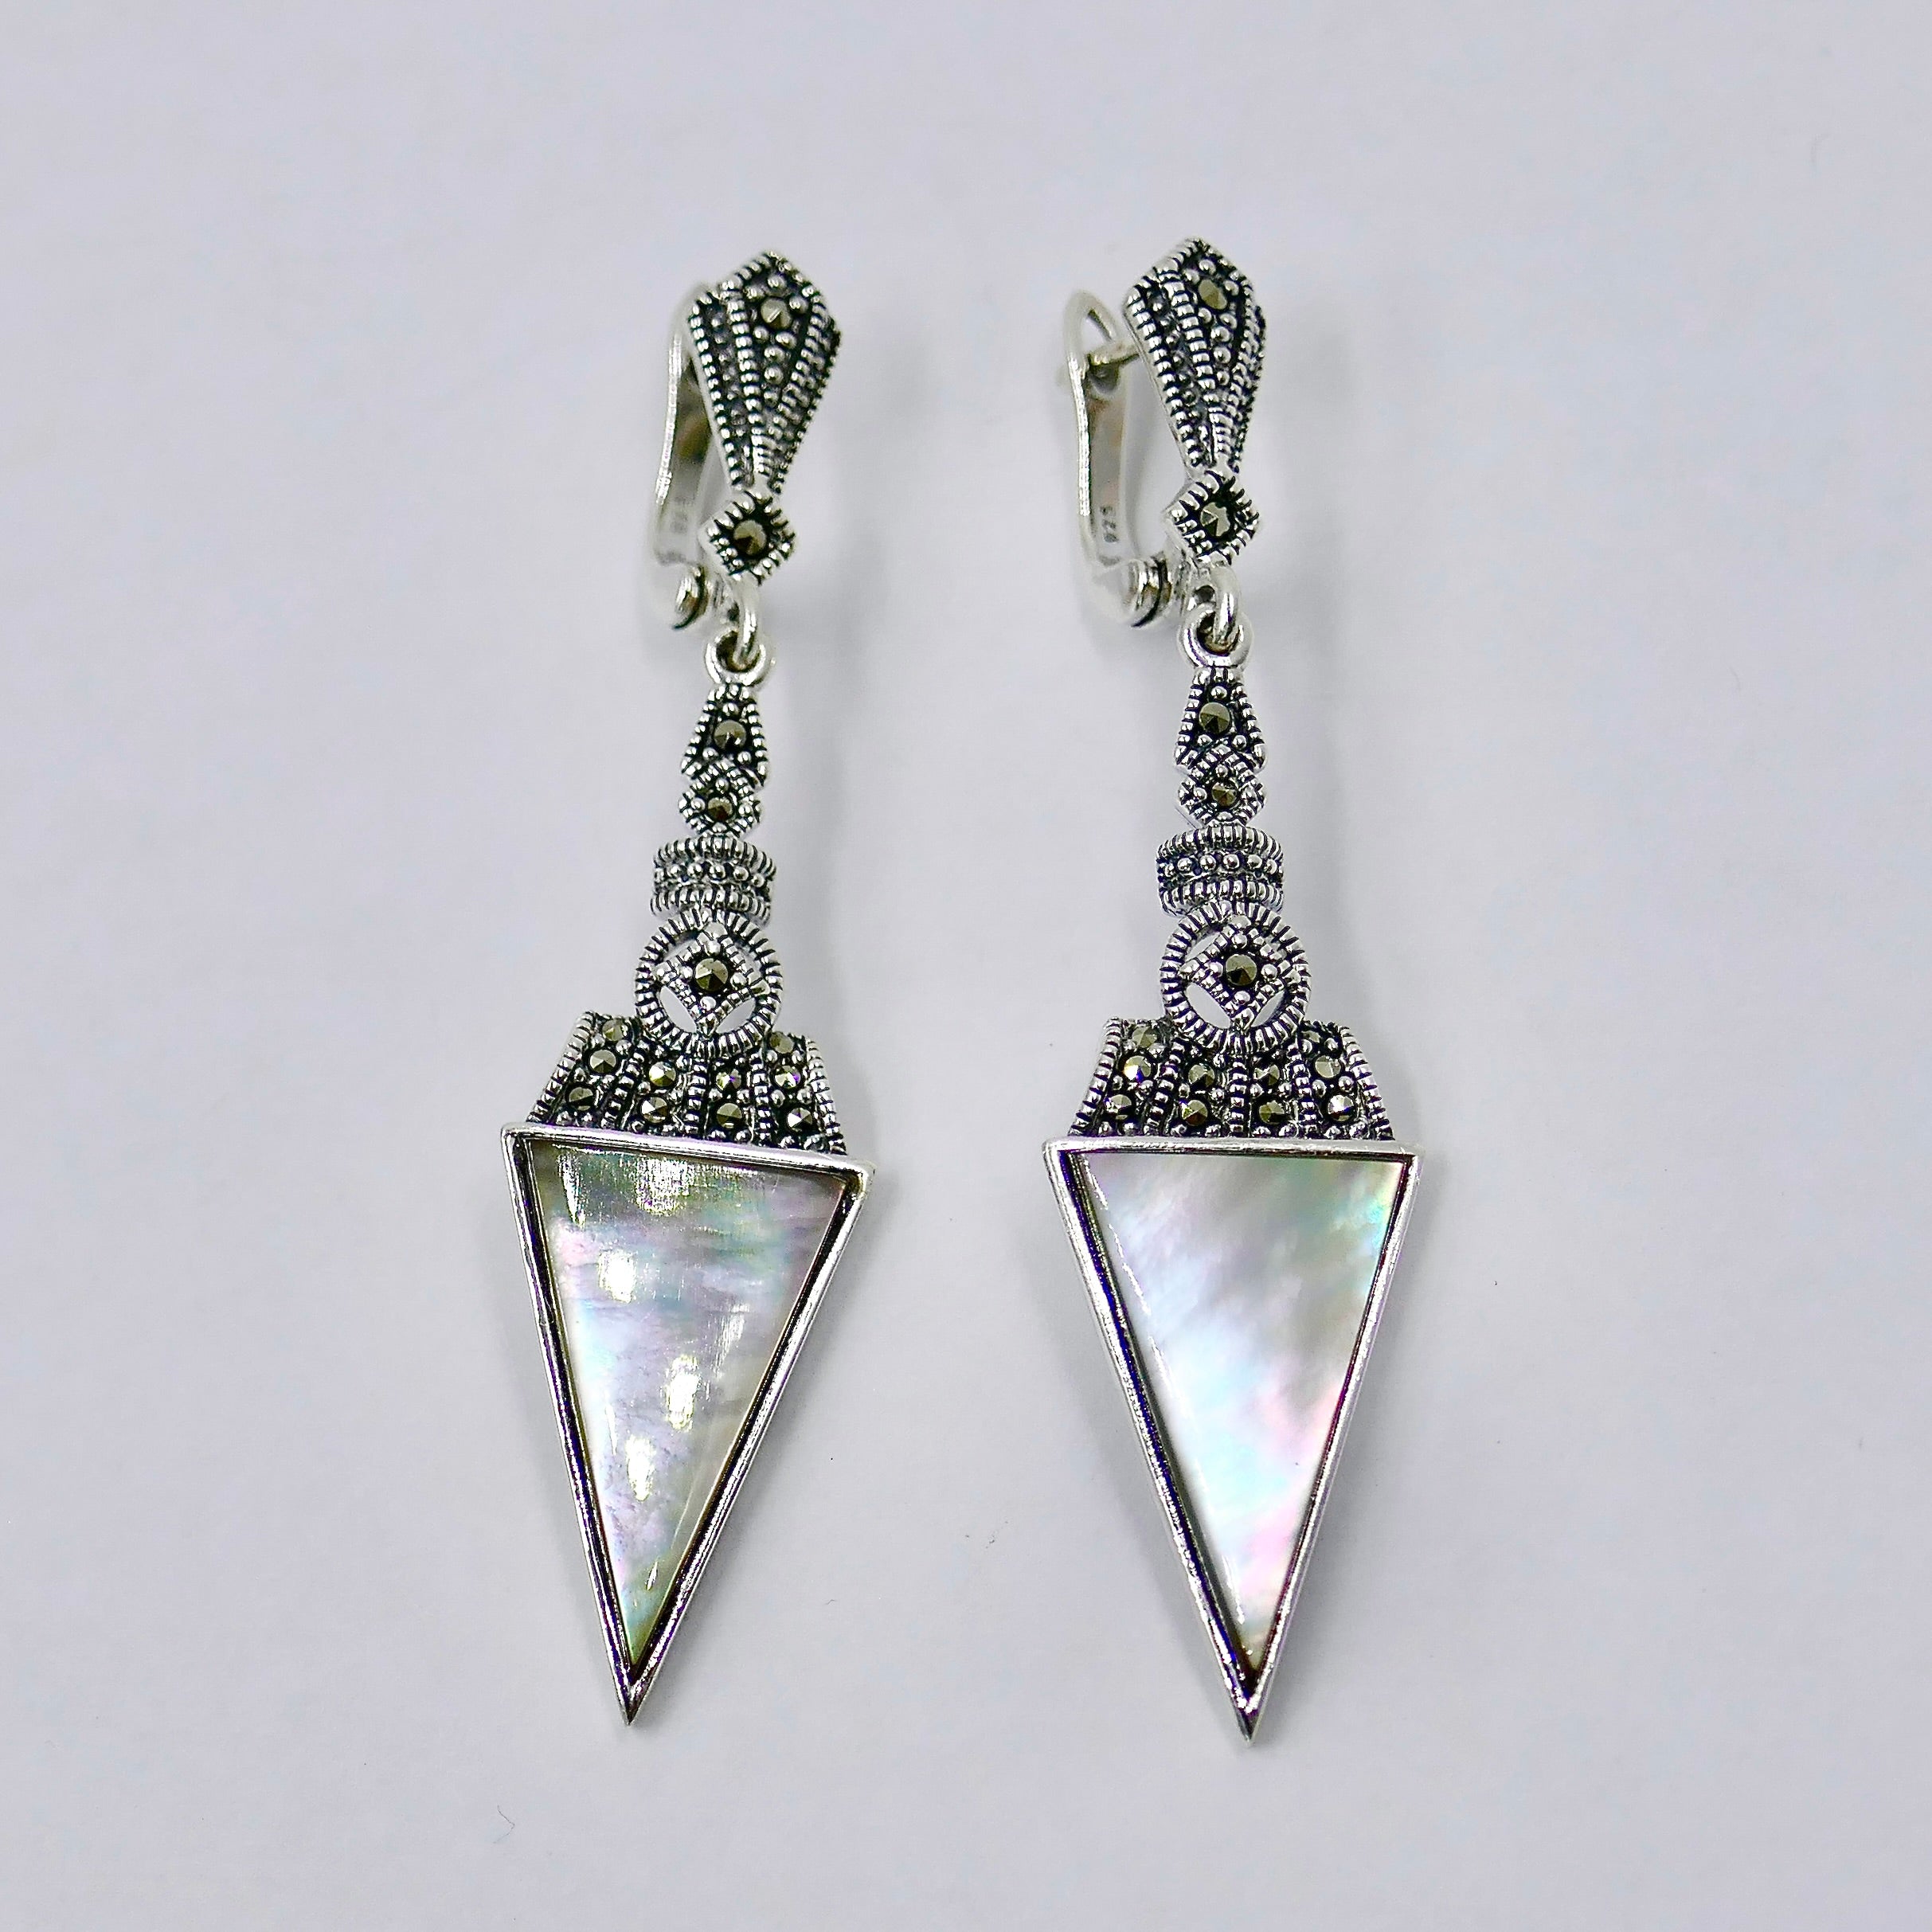 Silver earrings with mother-of-pearl | Серьги из серебра с перламутром